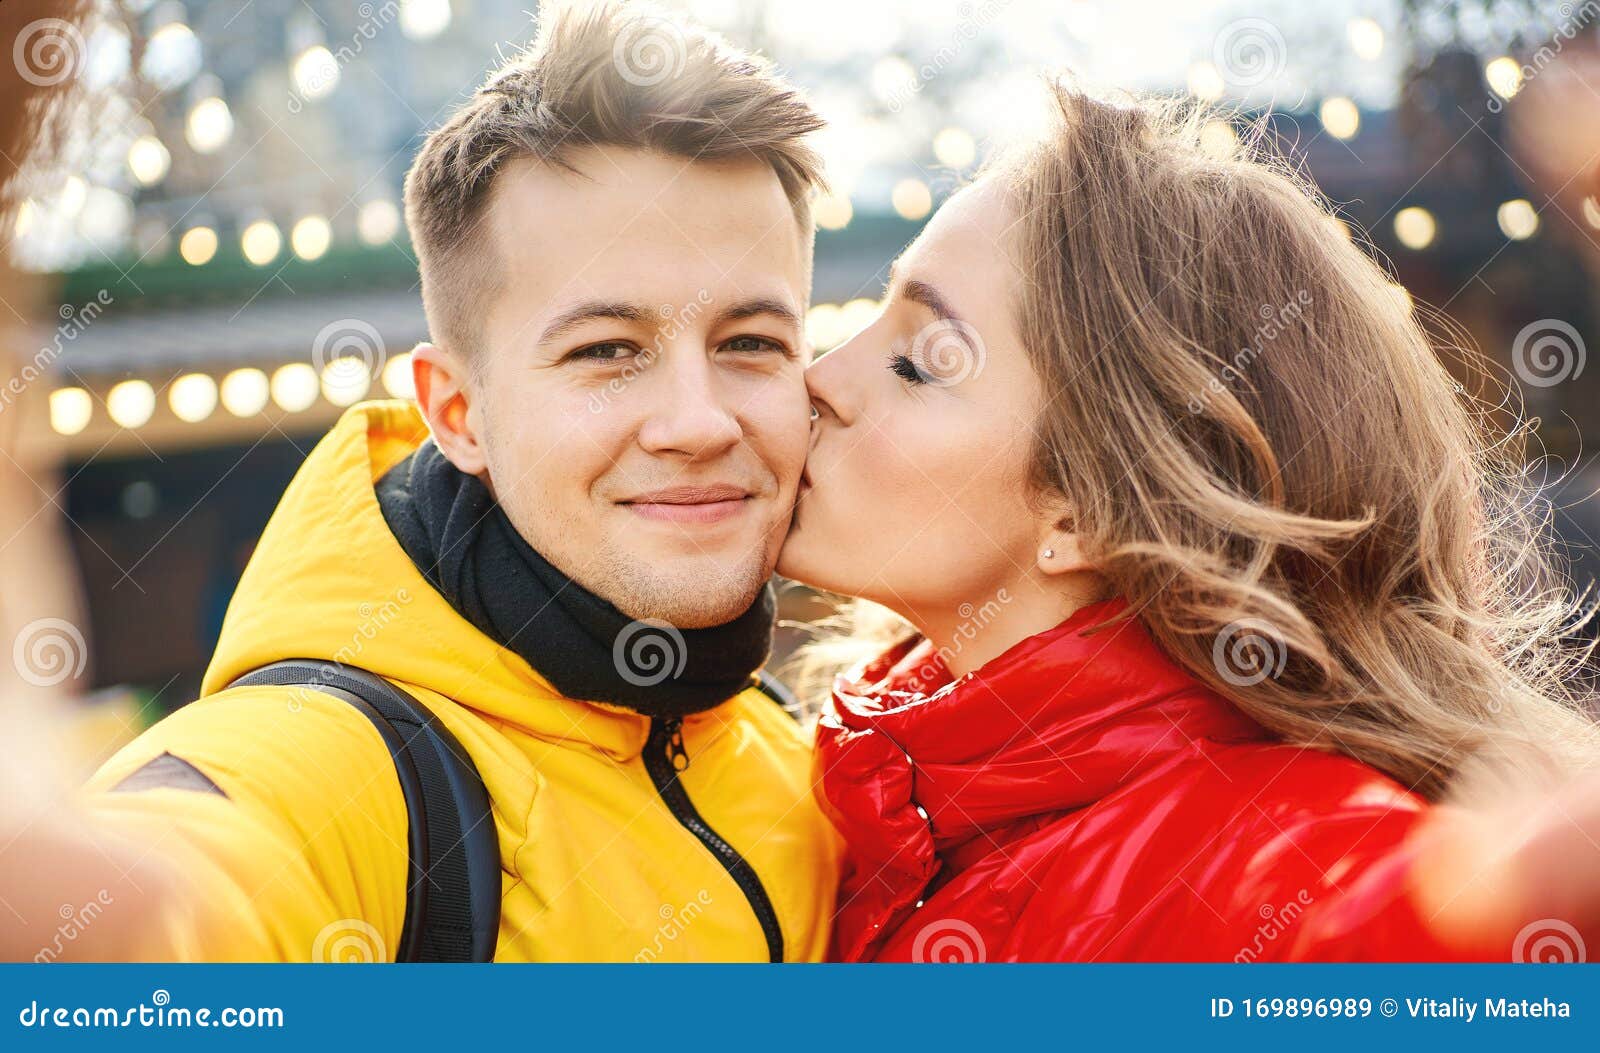 Romantic Couples Photoshoot Experience in Nashville, TN